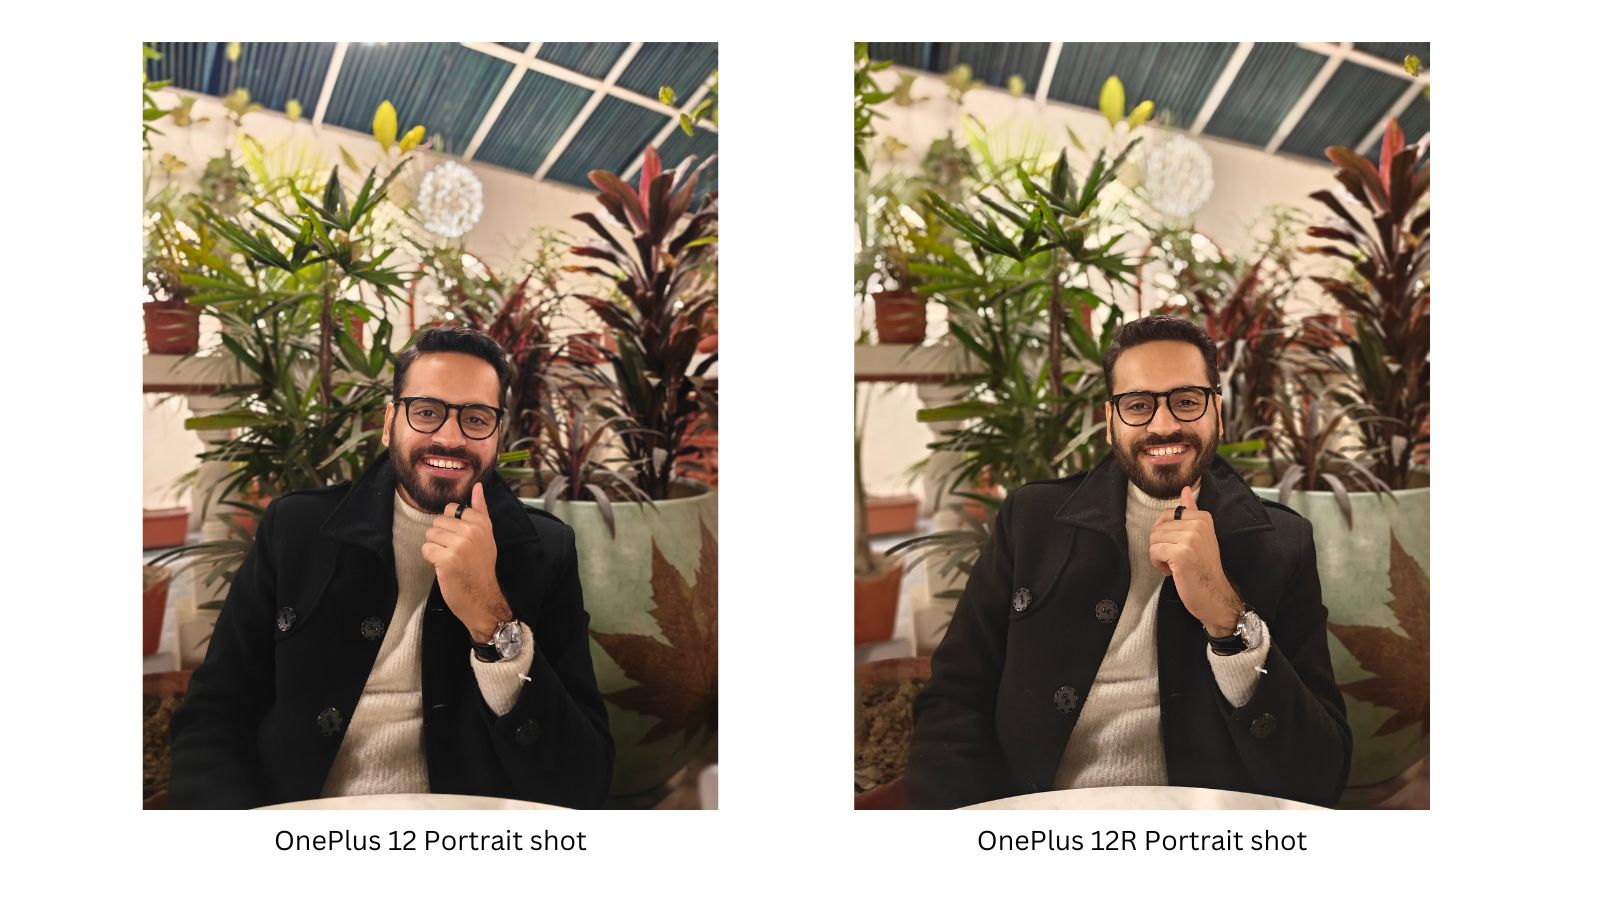 Prakhar Khanna portrait shots comparison on OnePlus 12 and OnePlus 12R.